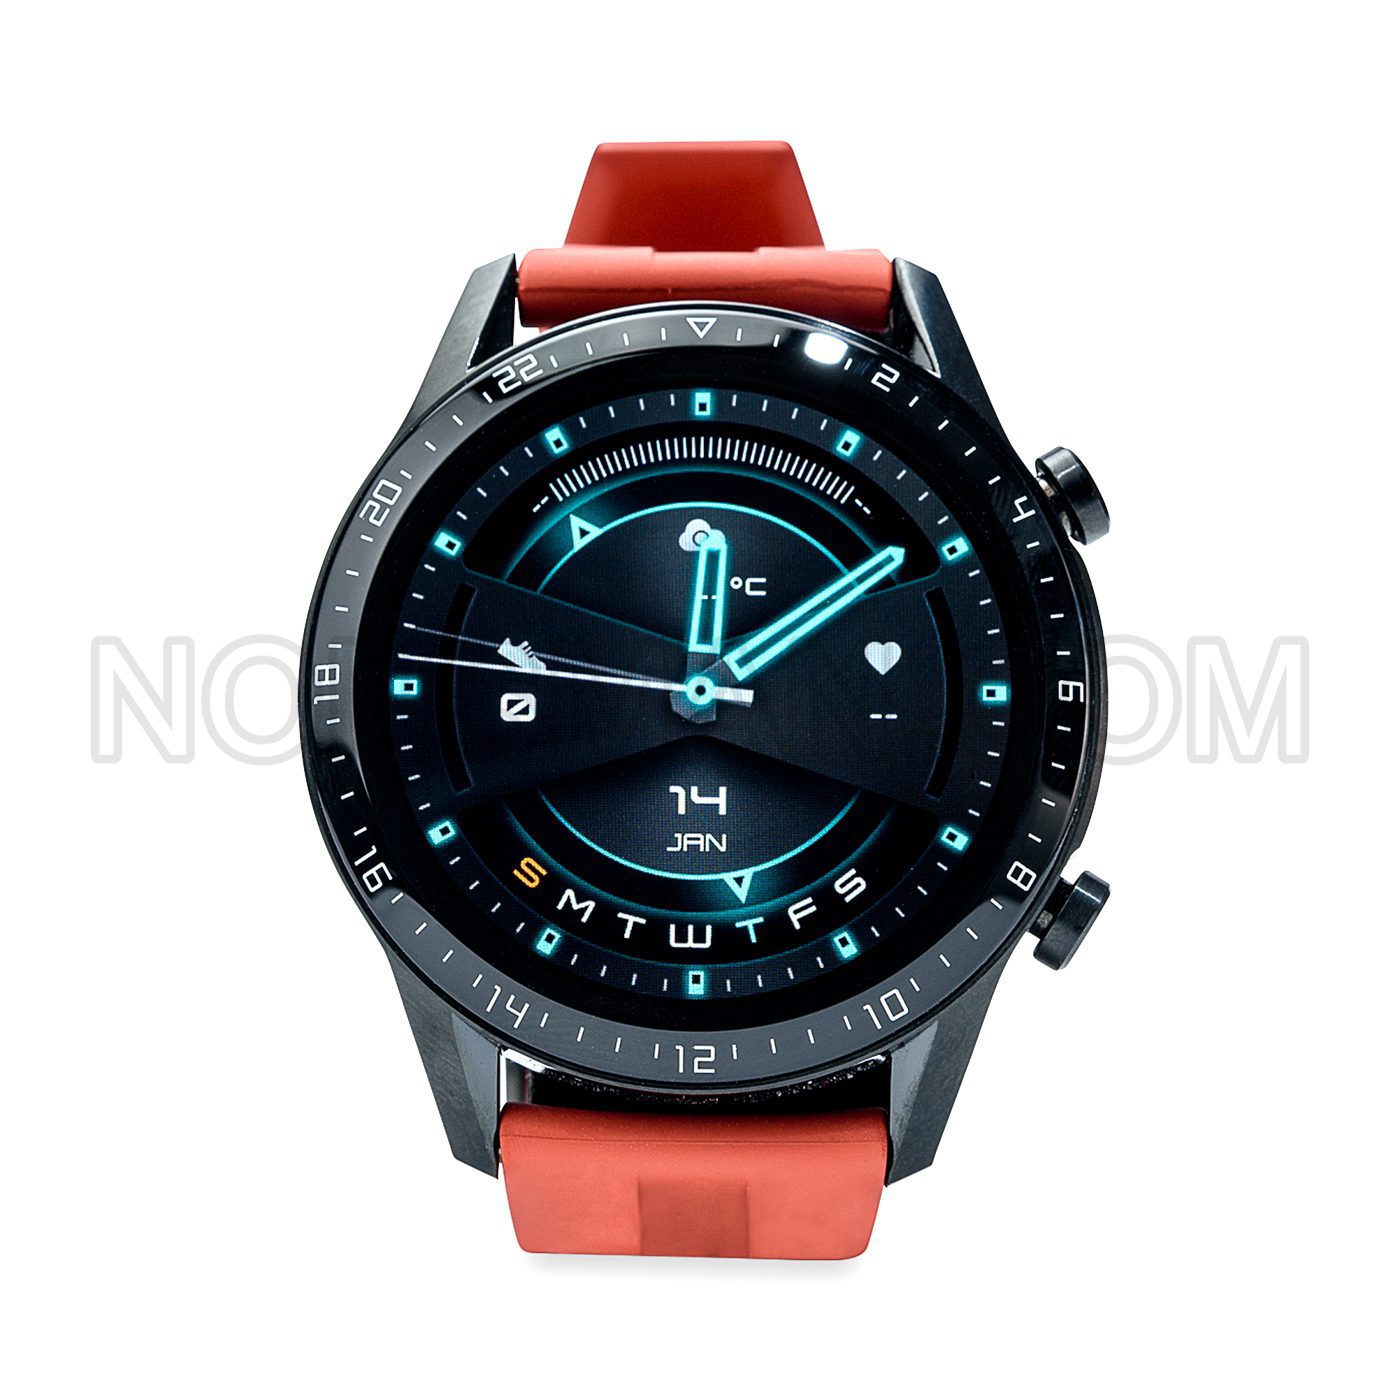 Huawei Gt 2 42mm Smart Watch – Brown